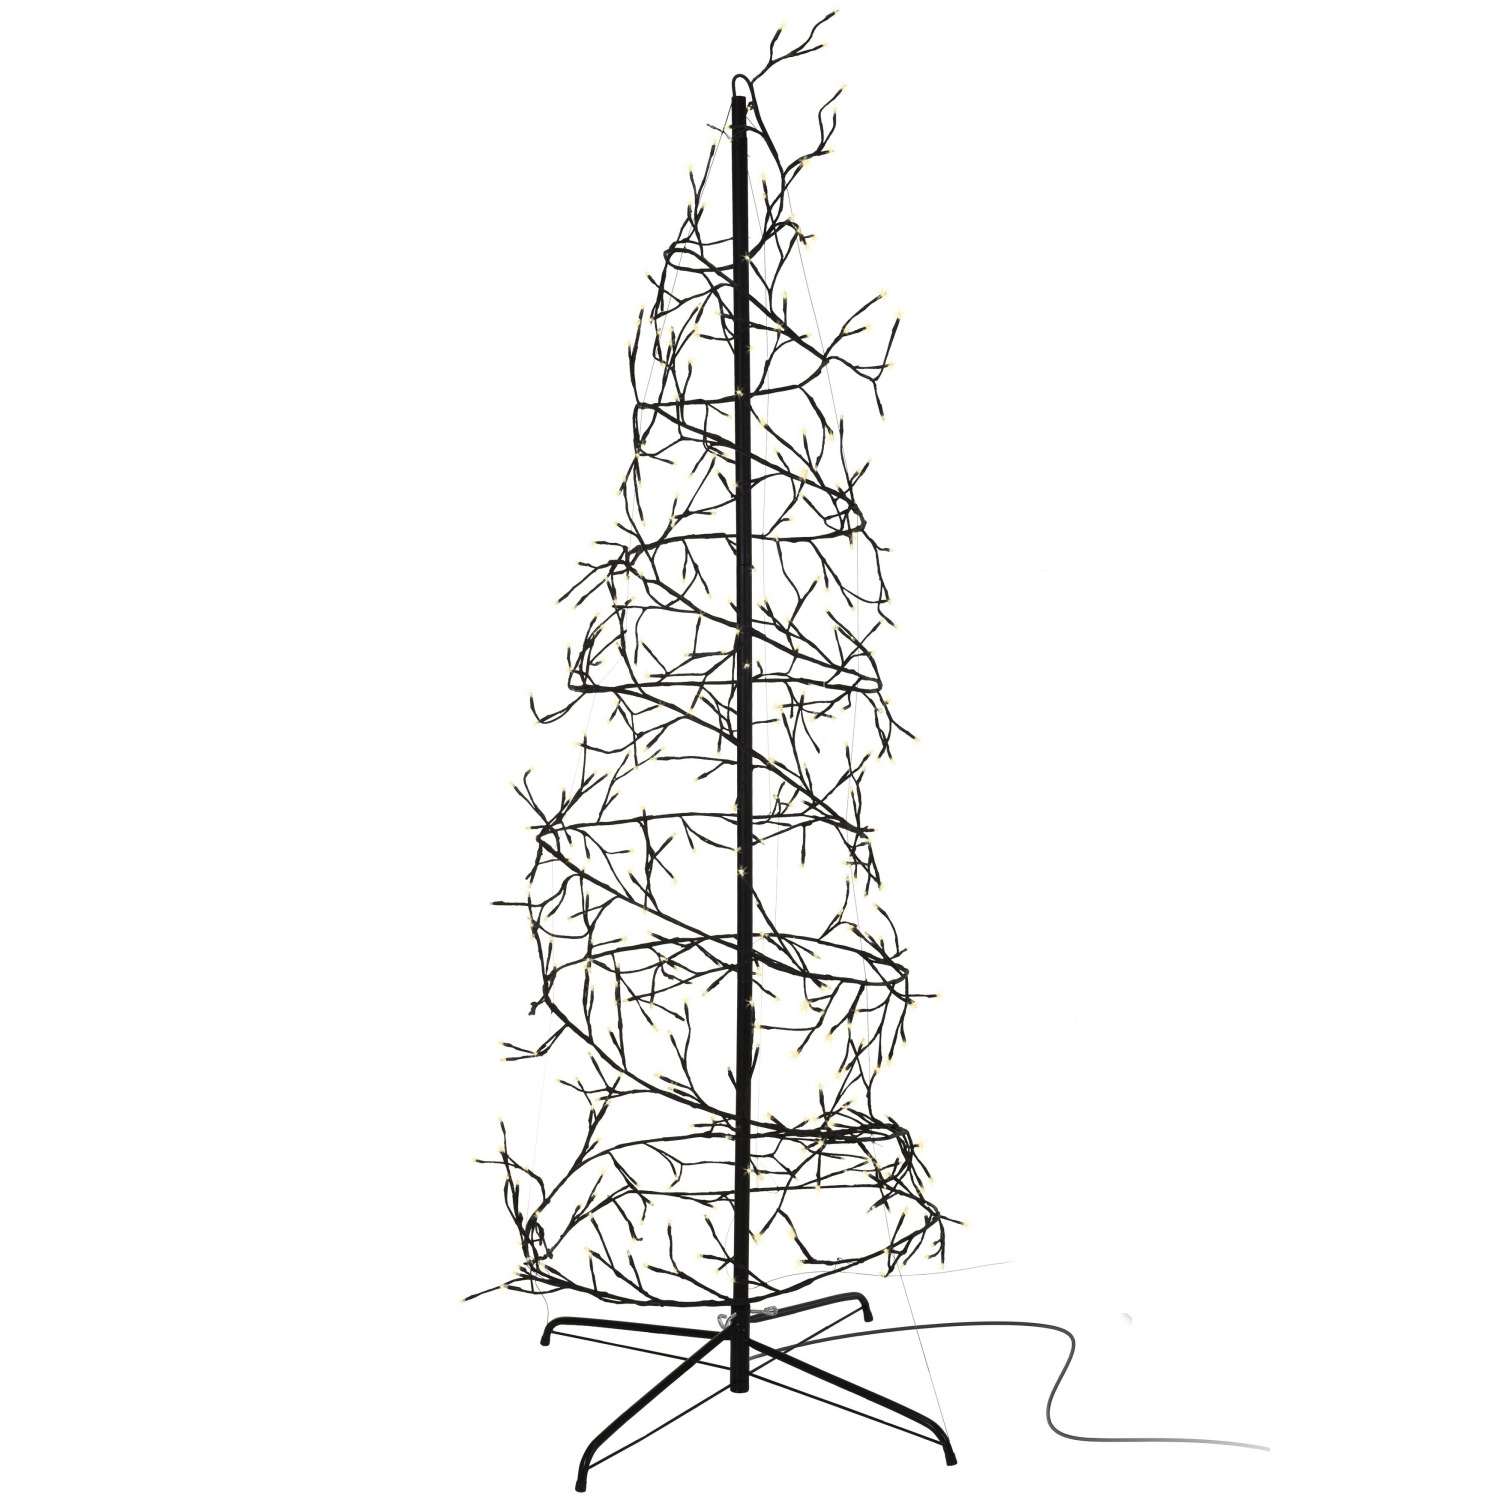 https://www.onshop24.eu/media/image/product/5911/lg/spiralbaum-360-led-baum-warmweiss-150-cm-weihnachtsbaum-weihnachtsbeleuchtung-innen-aussen-ip44.jpg